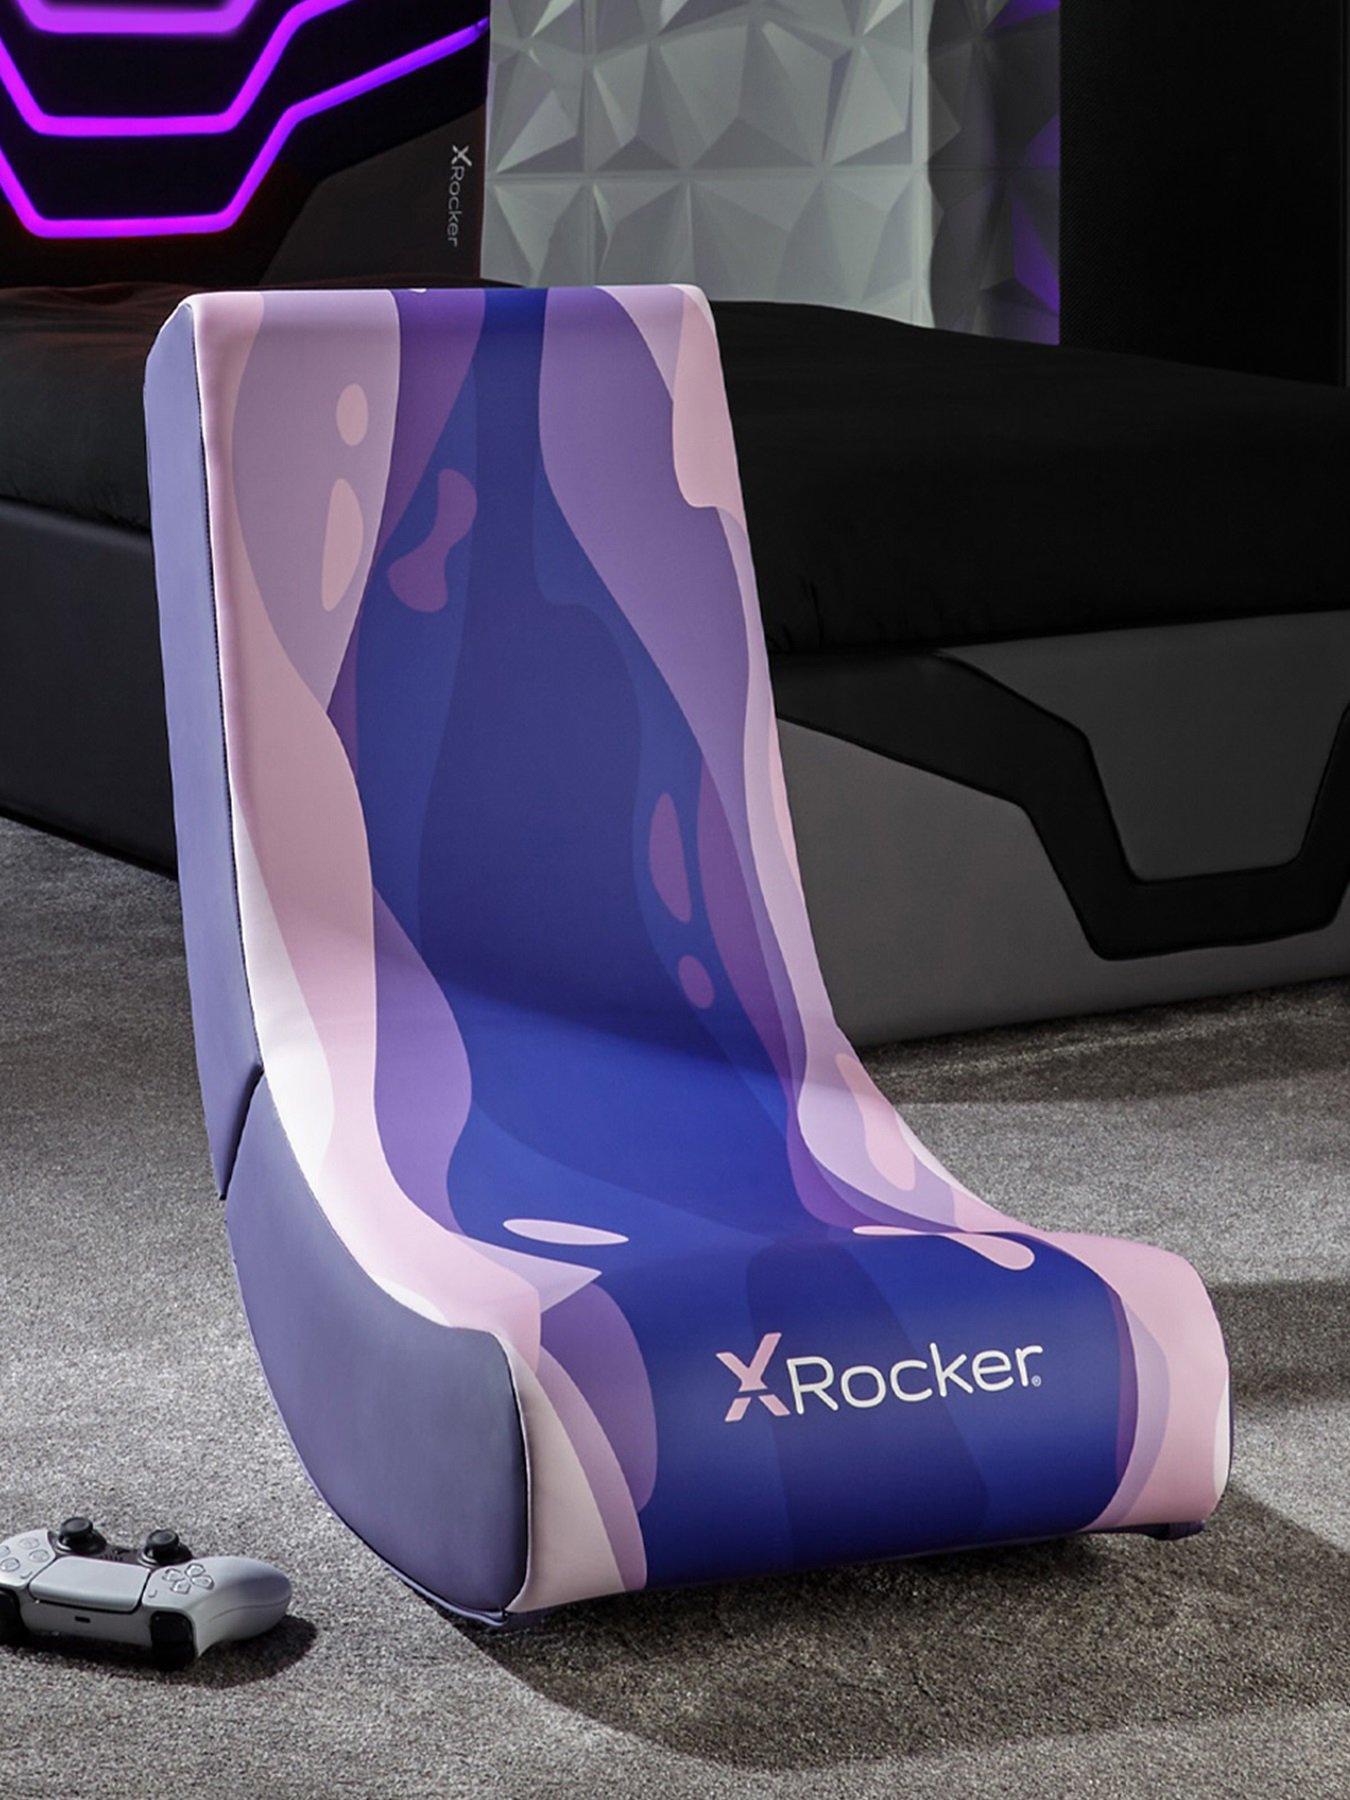 X Rocker Video Rocker - Lava Edition Foldable Gaming Chair